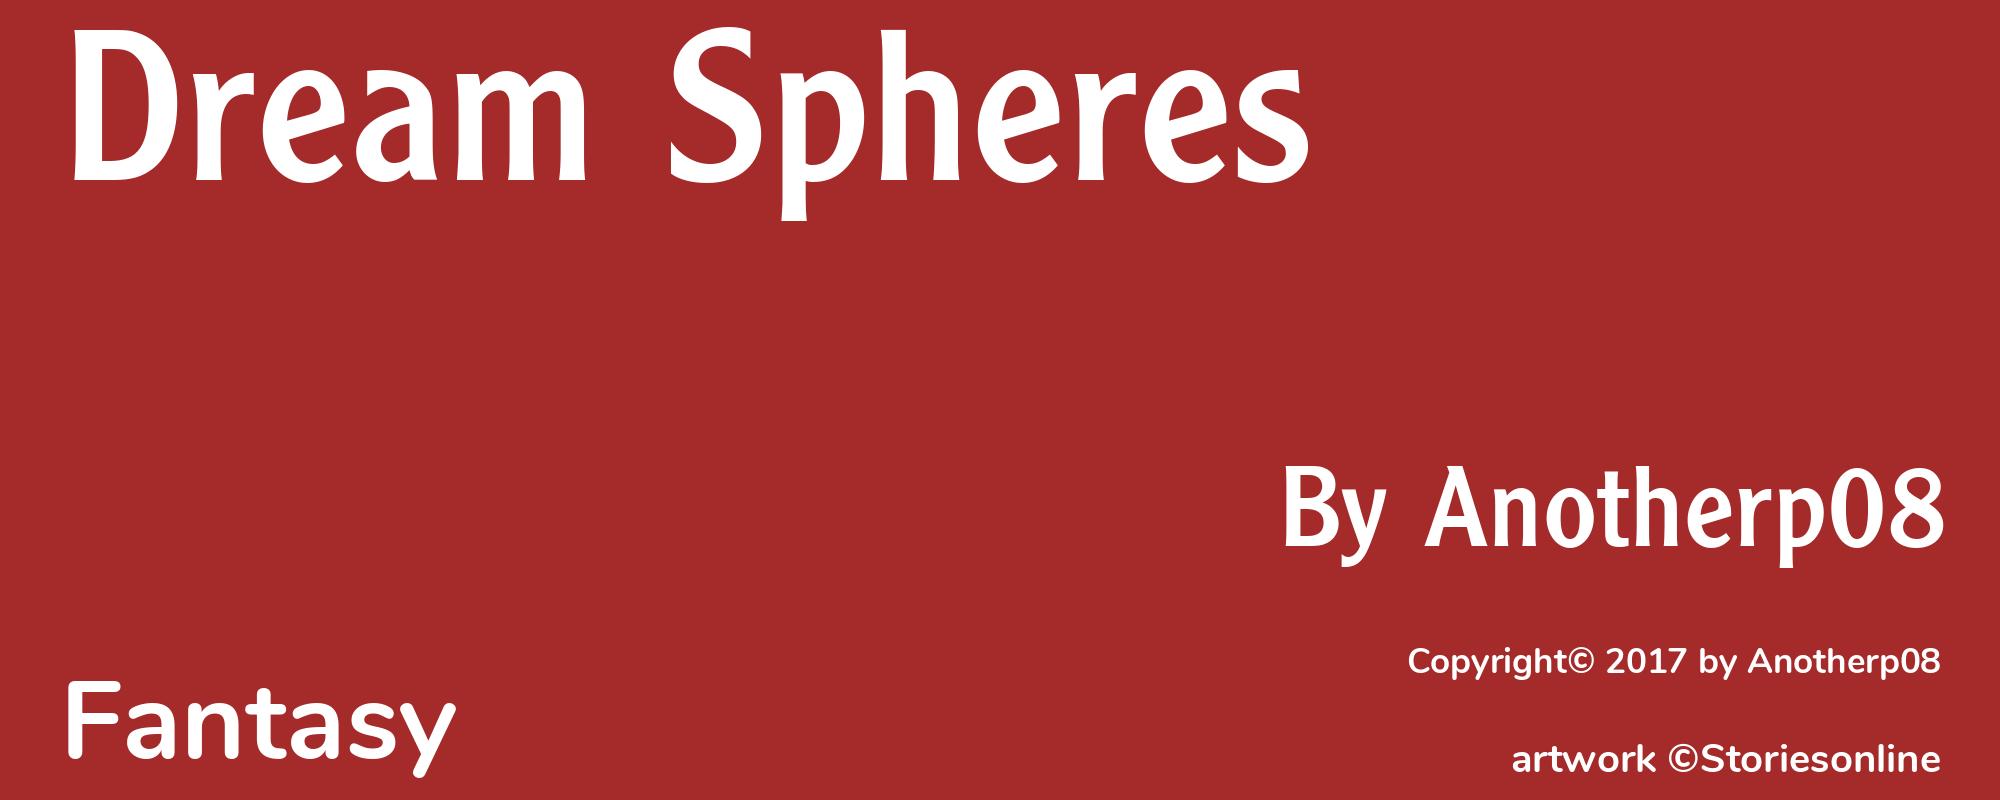 Dream Spheres - Cover